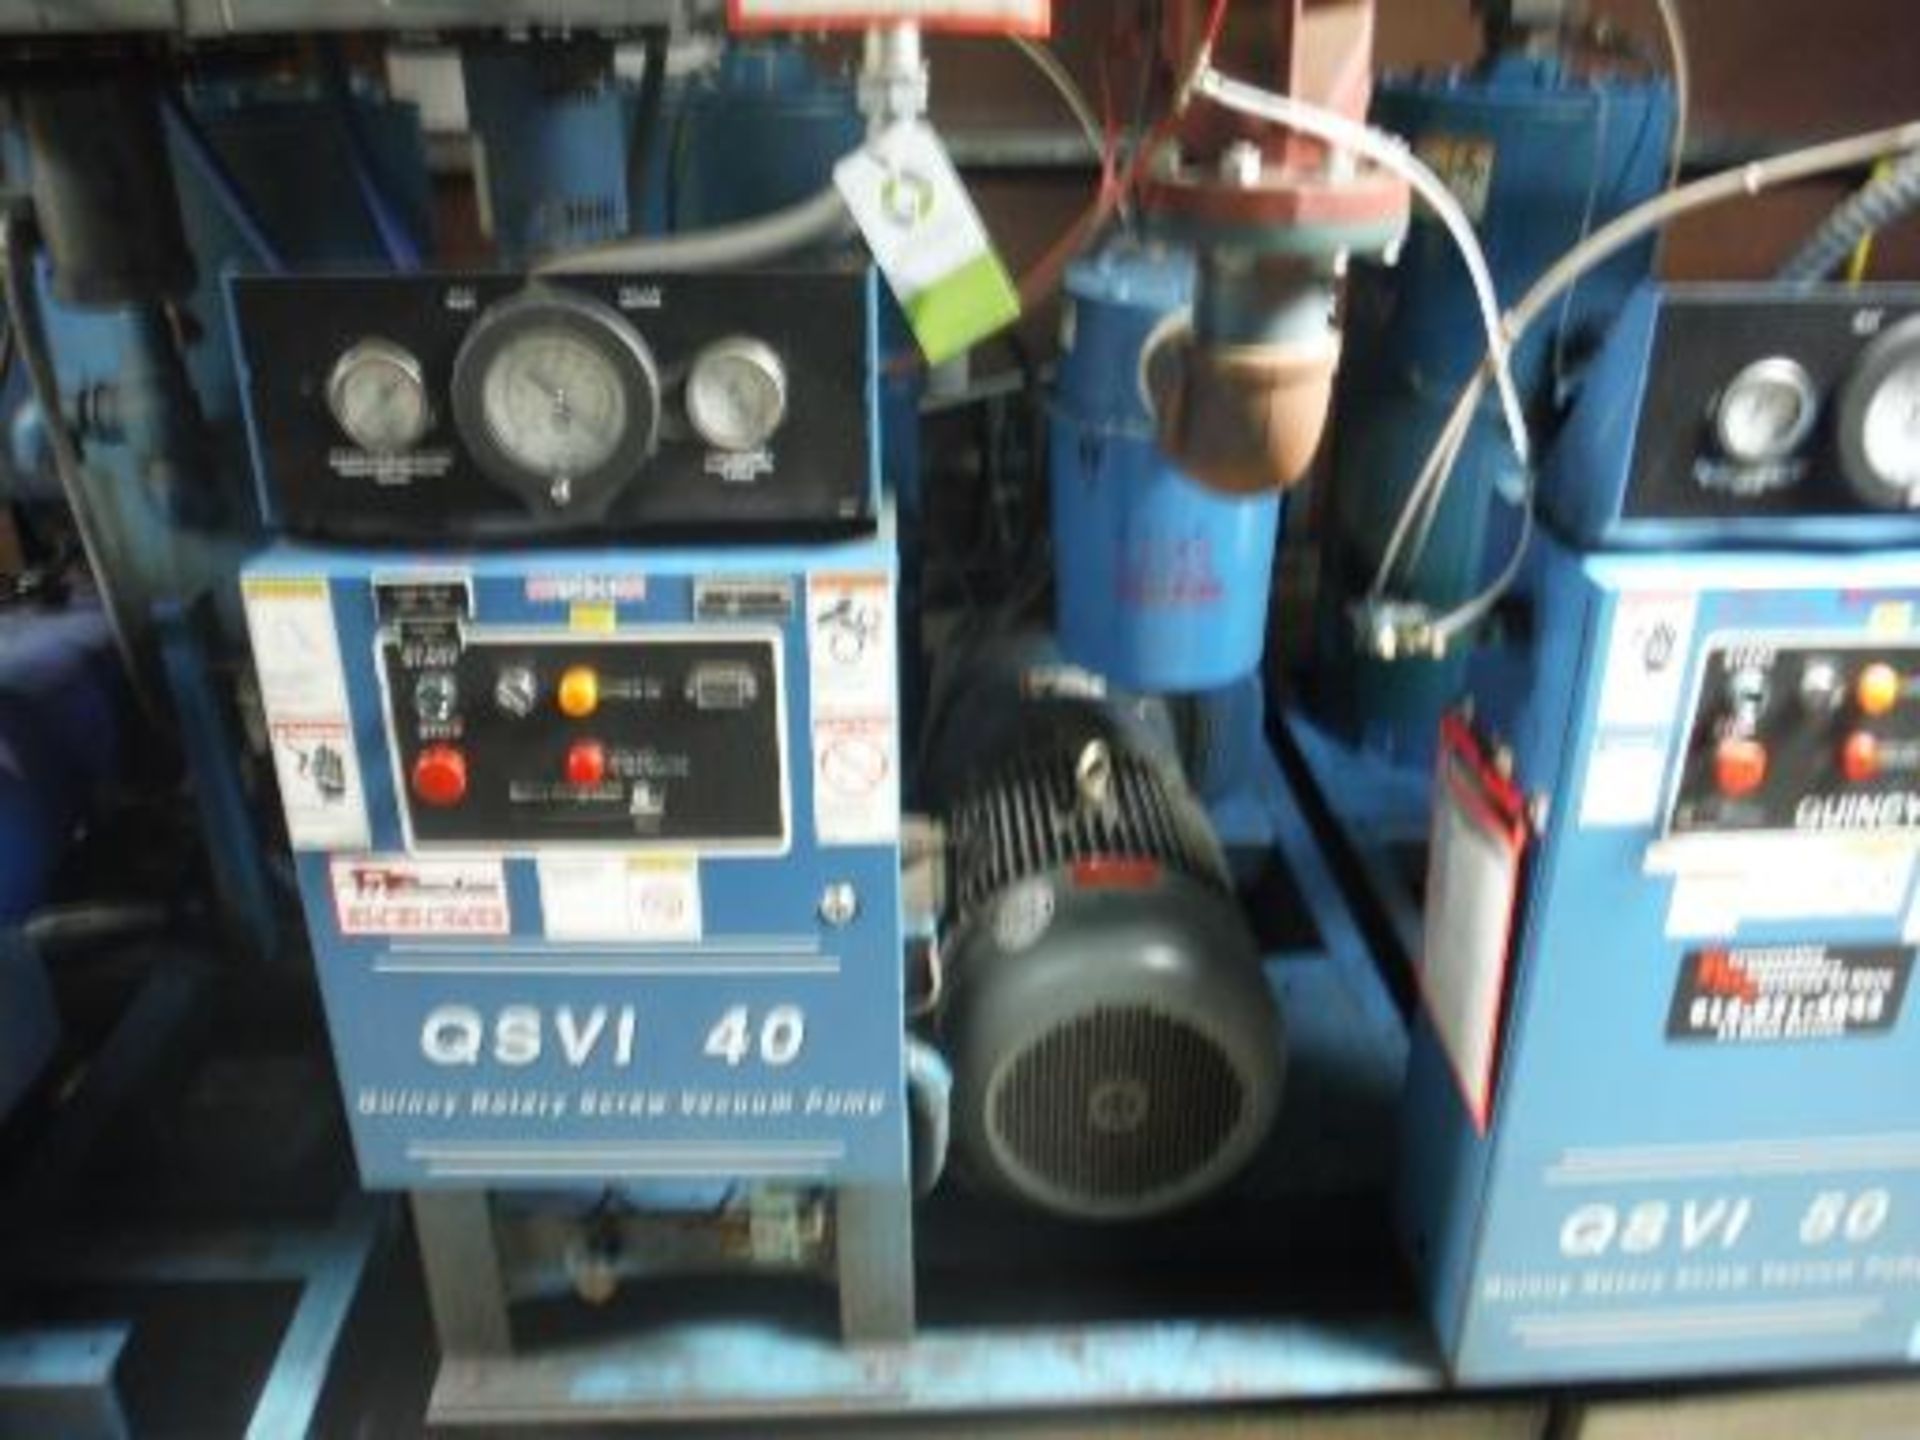 Colt Industries skid mounted vacuum pump, Model: QSVI40AN3H, S/N: 98292H, 40 HP motor, w/ auto